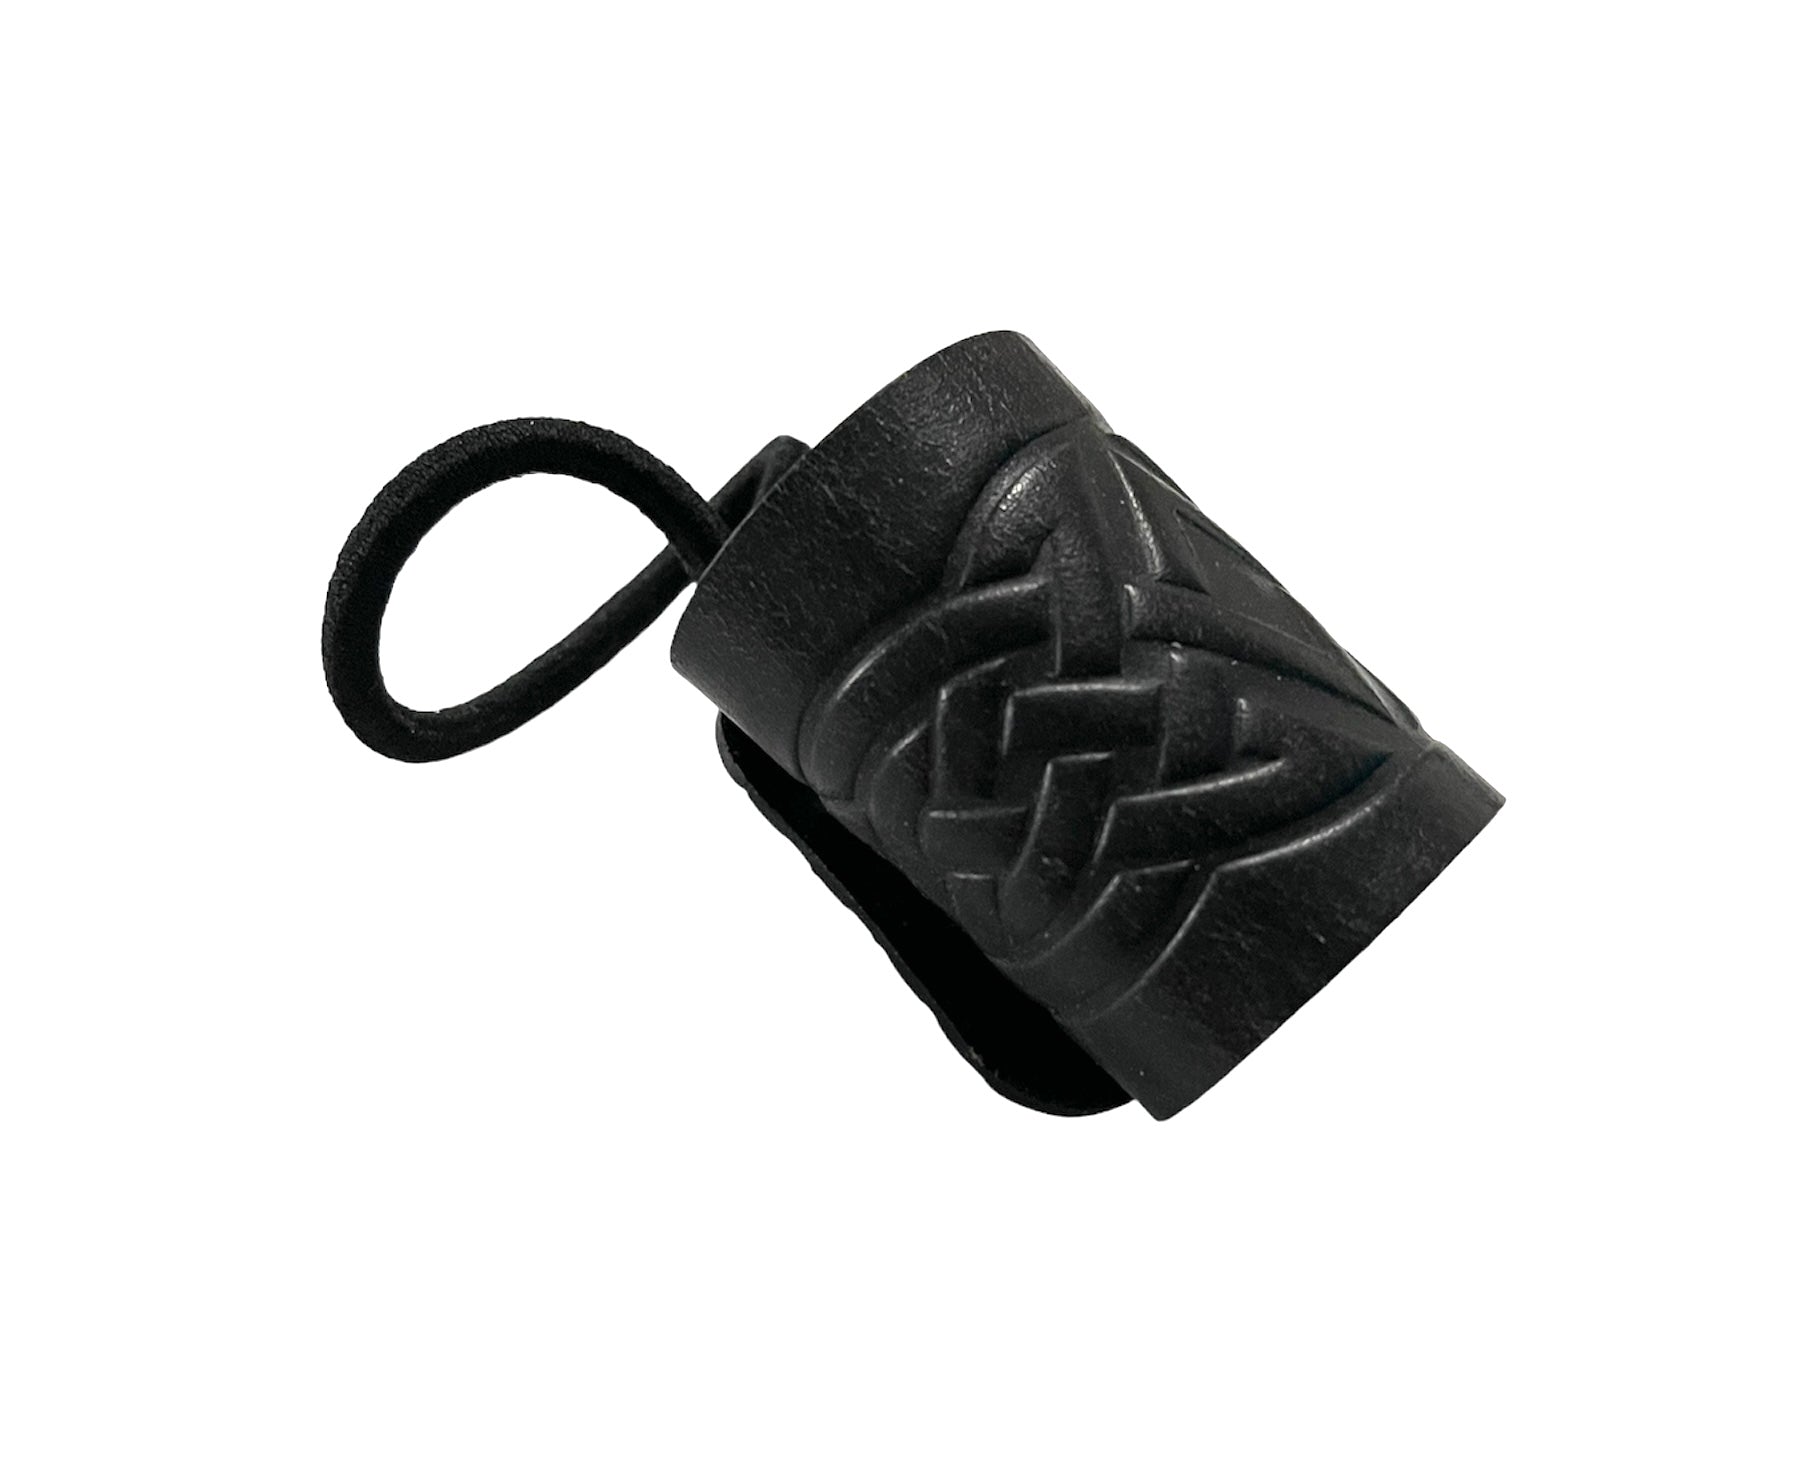 Handmade Black Leather Viking Long Knot Hair Tie Ponytail Holder